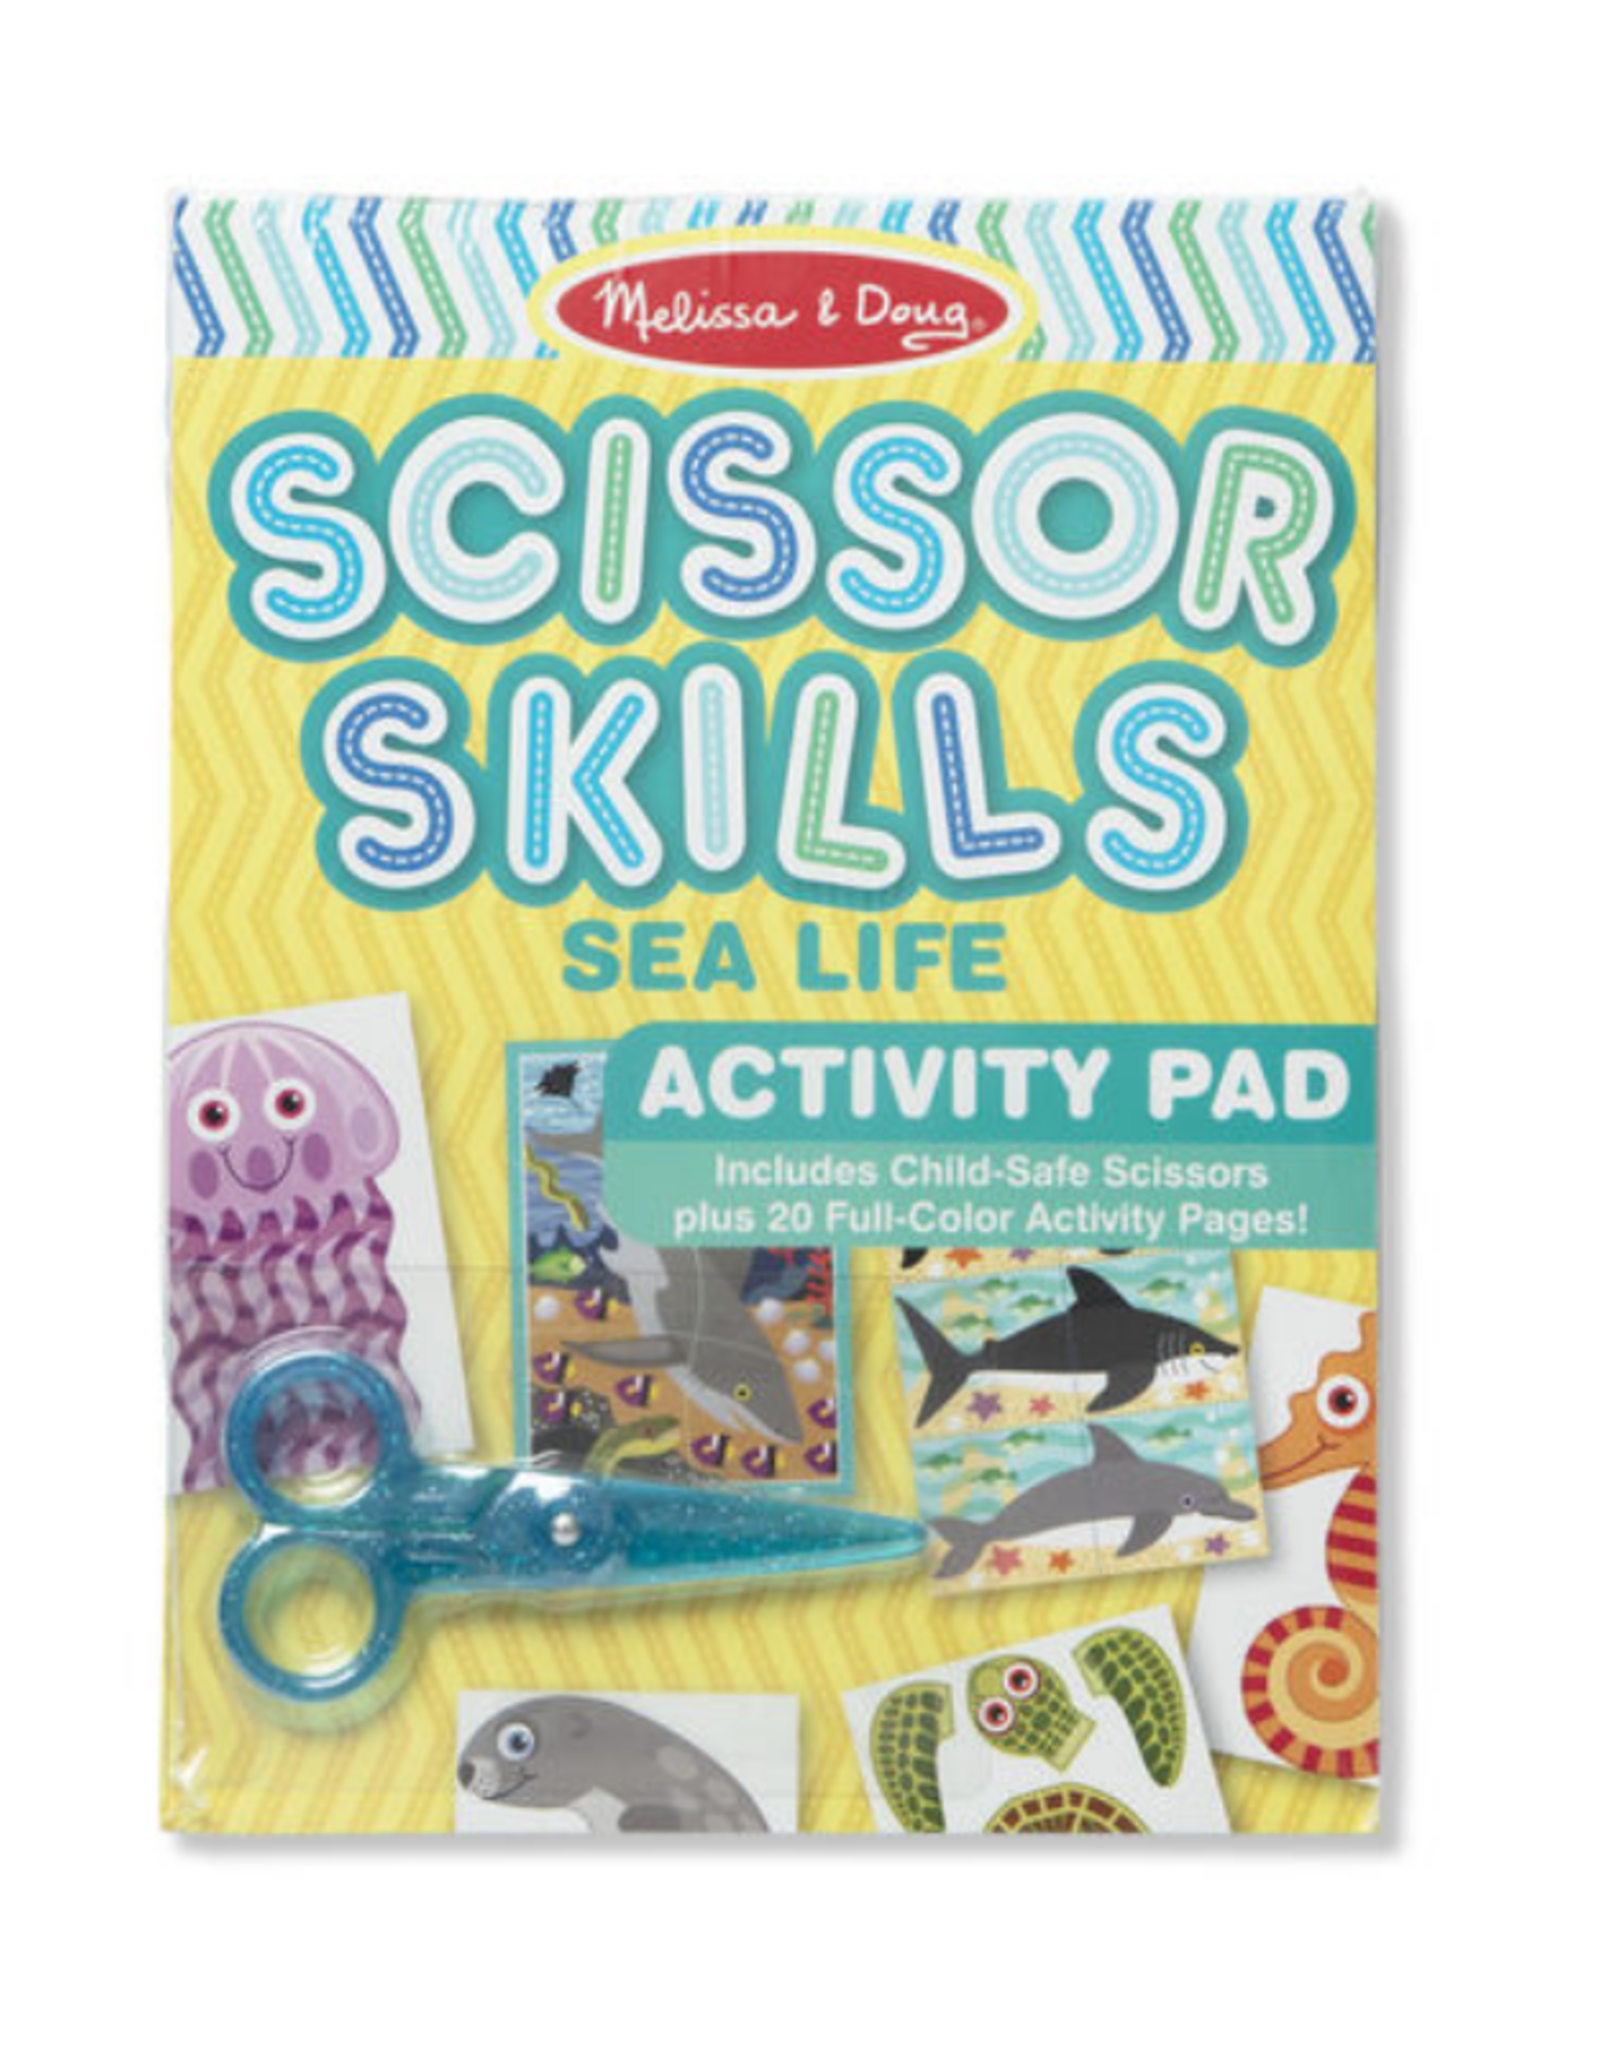 Download Scissor Skills Sea Life Family Fun Hobbies